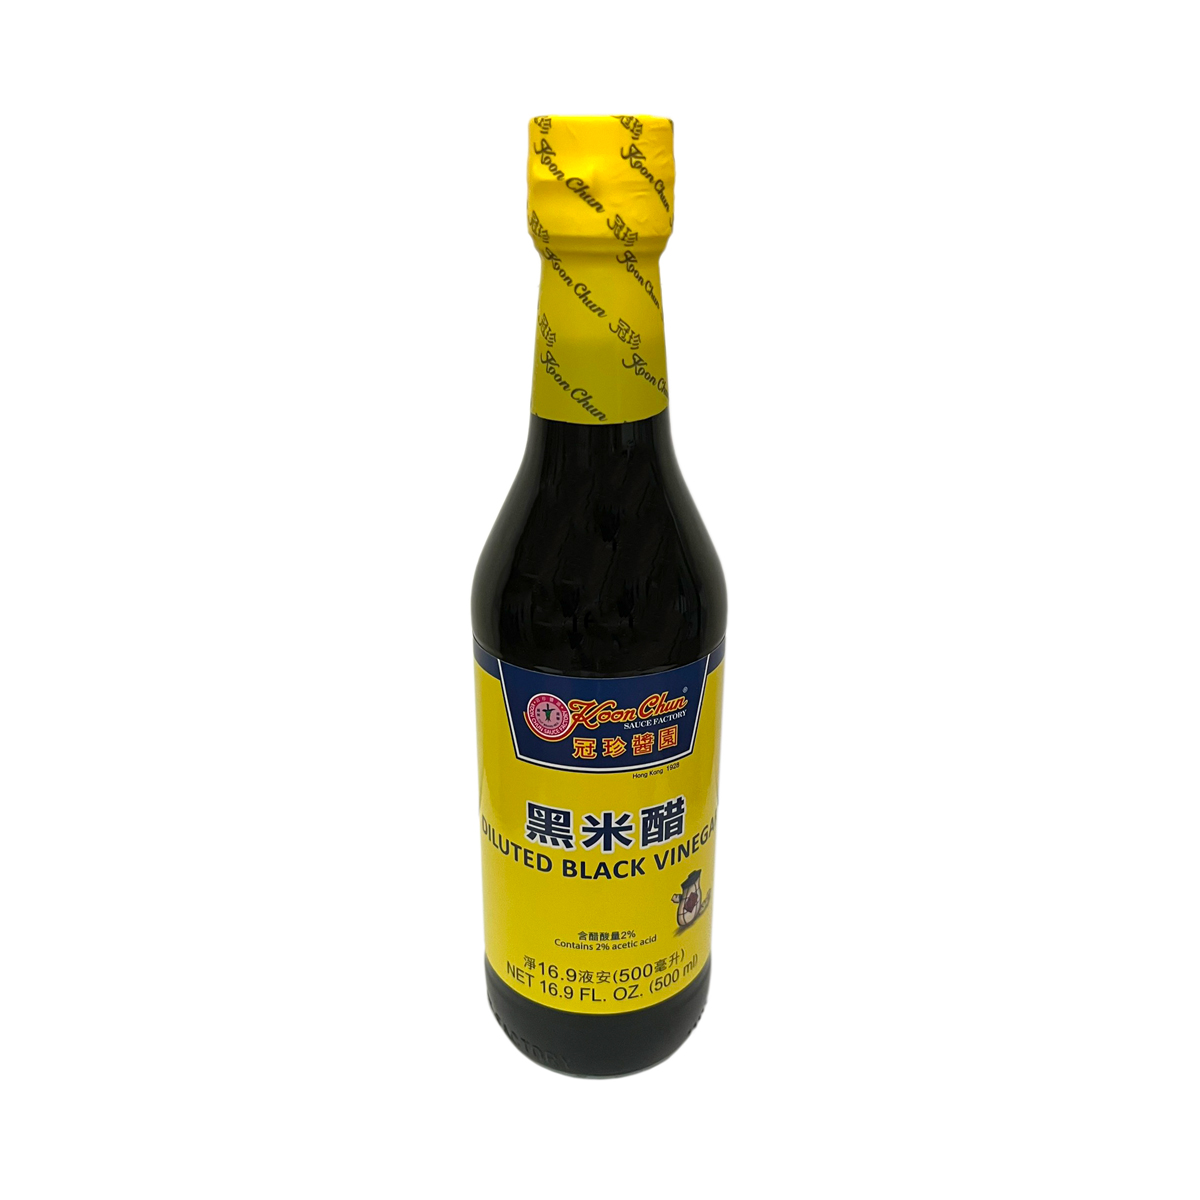 Koon Chun Black Vinegar | Asian Foods | Baldor Specialty Foods